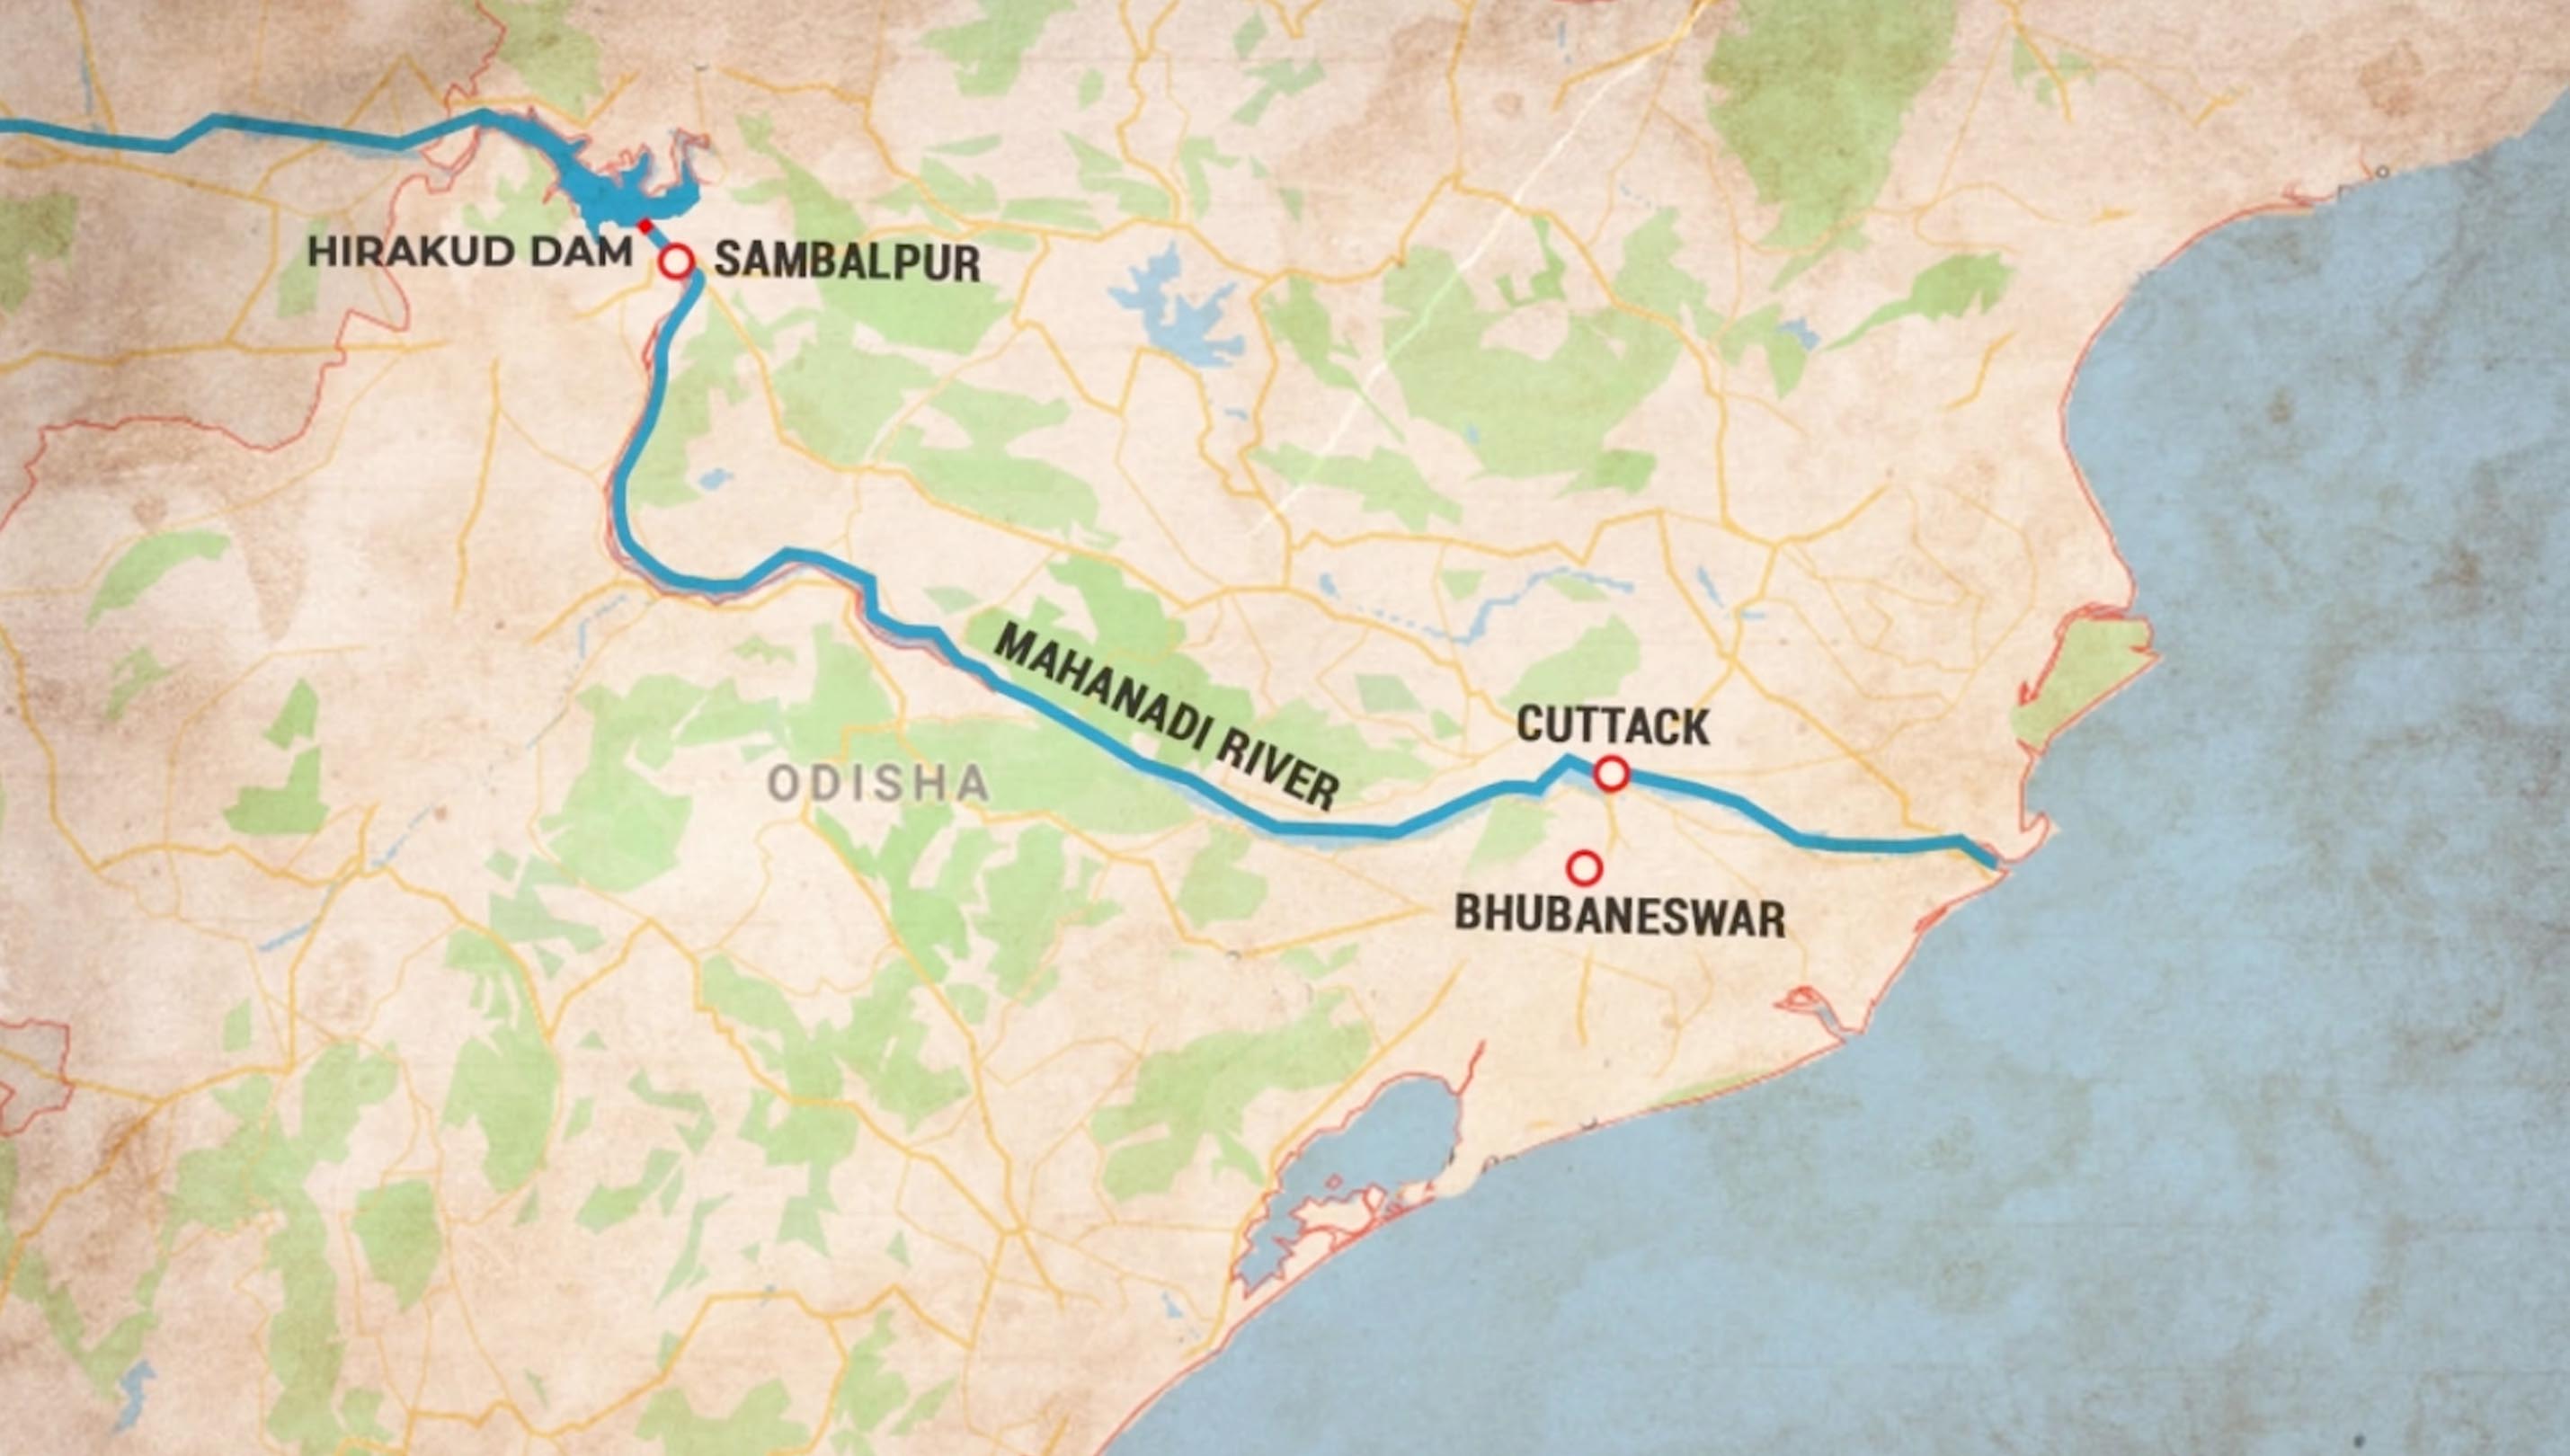 Location of Hirakud Dam in Odisha